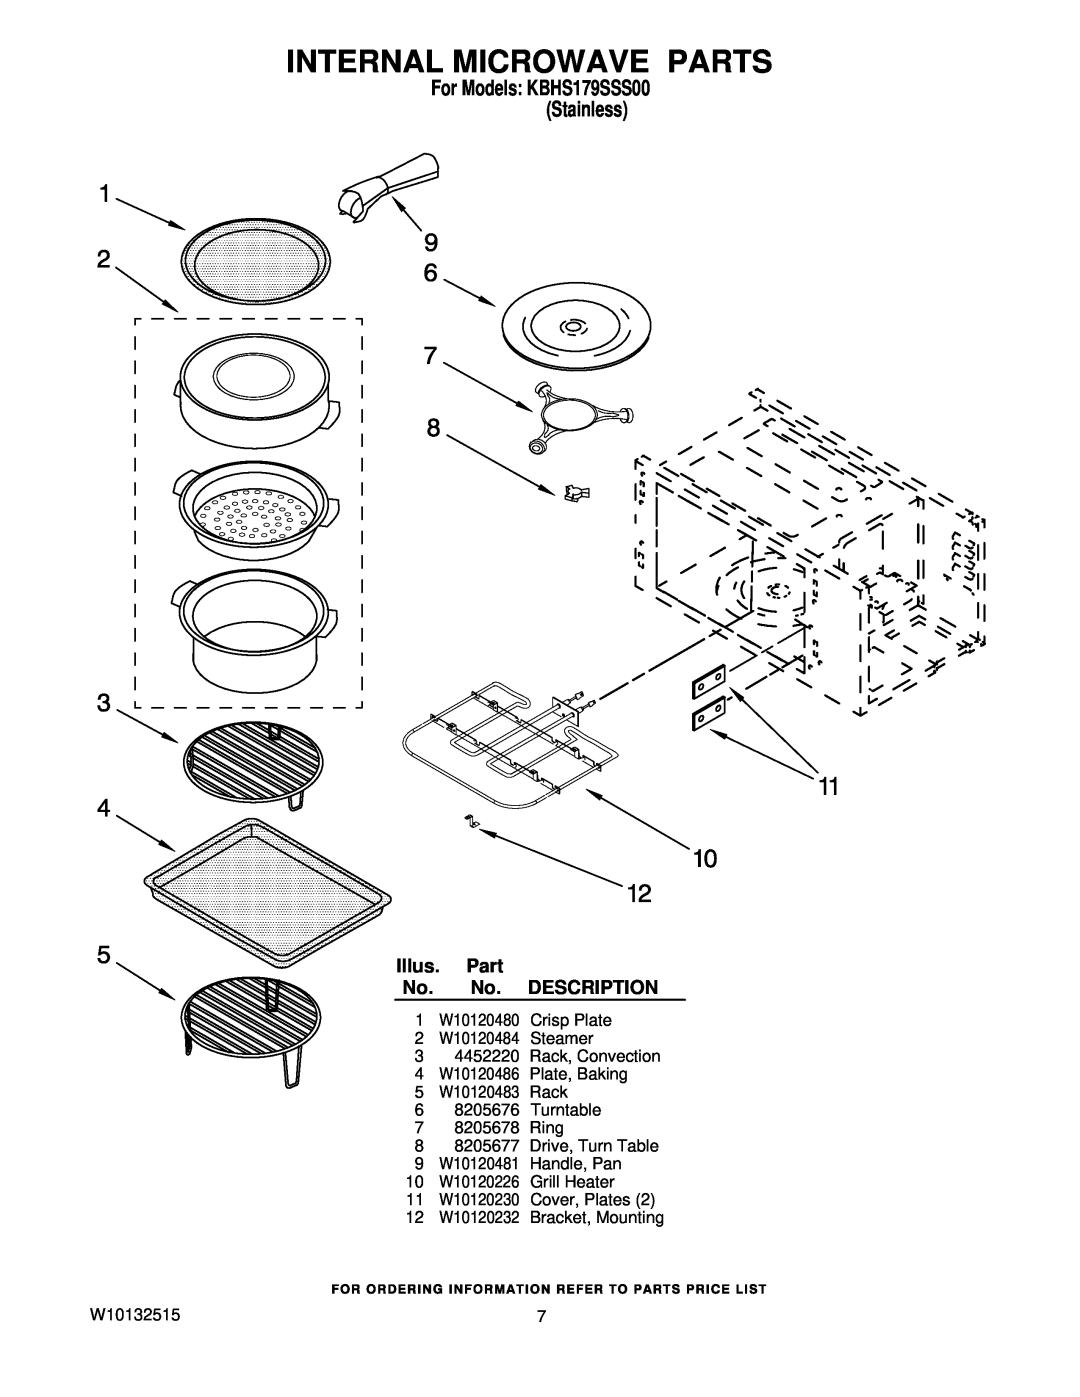 KitchenAid manual Internal Microwave Parts, Illus. Part No. No. DESCRIPTION, For Models KBHS179SSS00 Stainless 